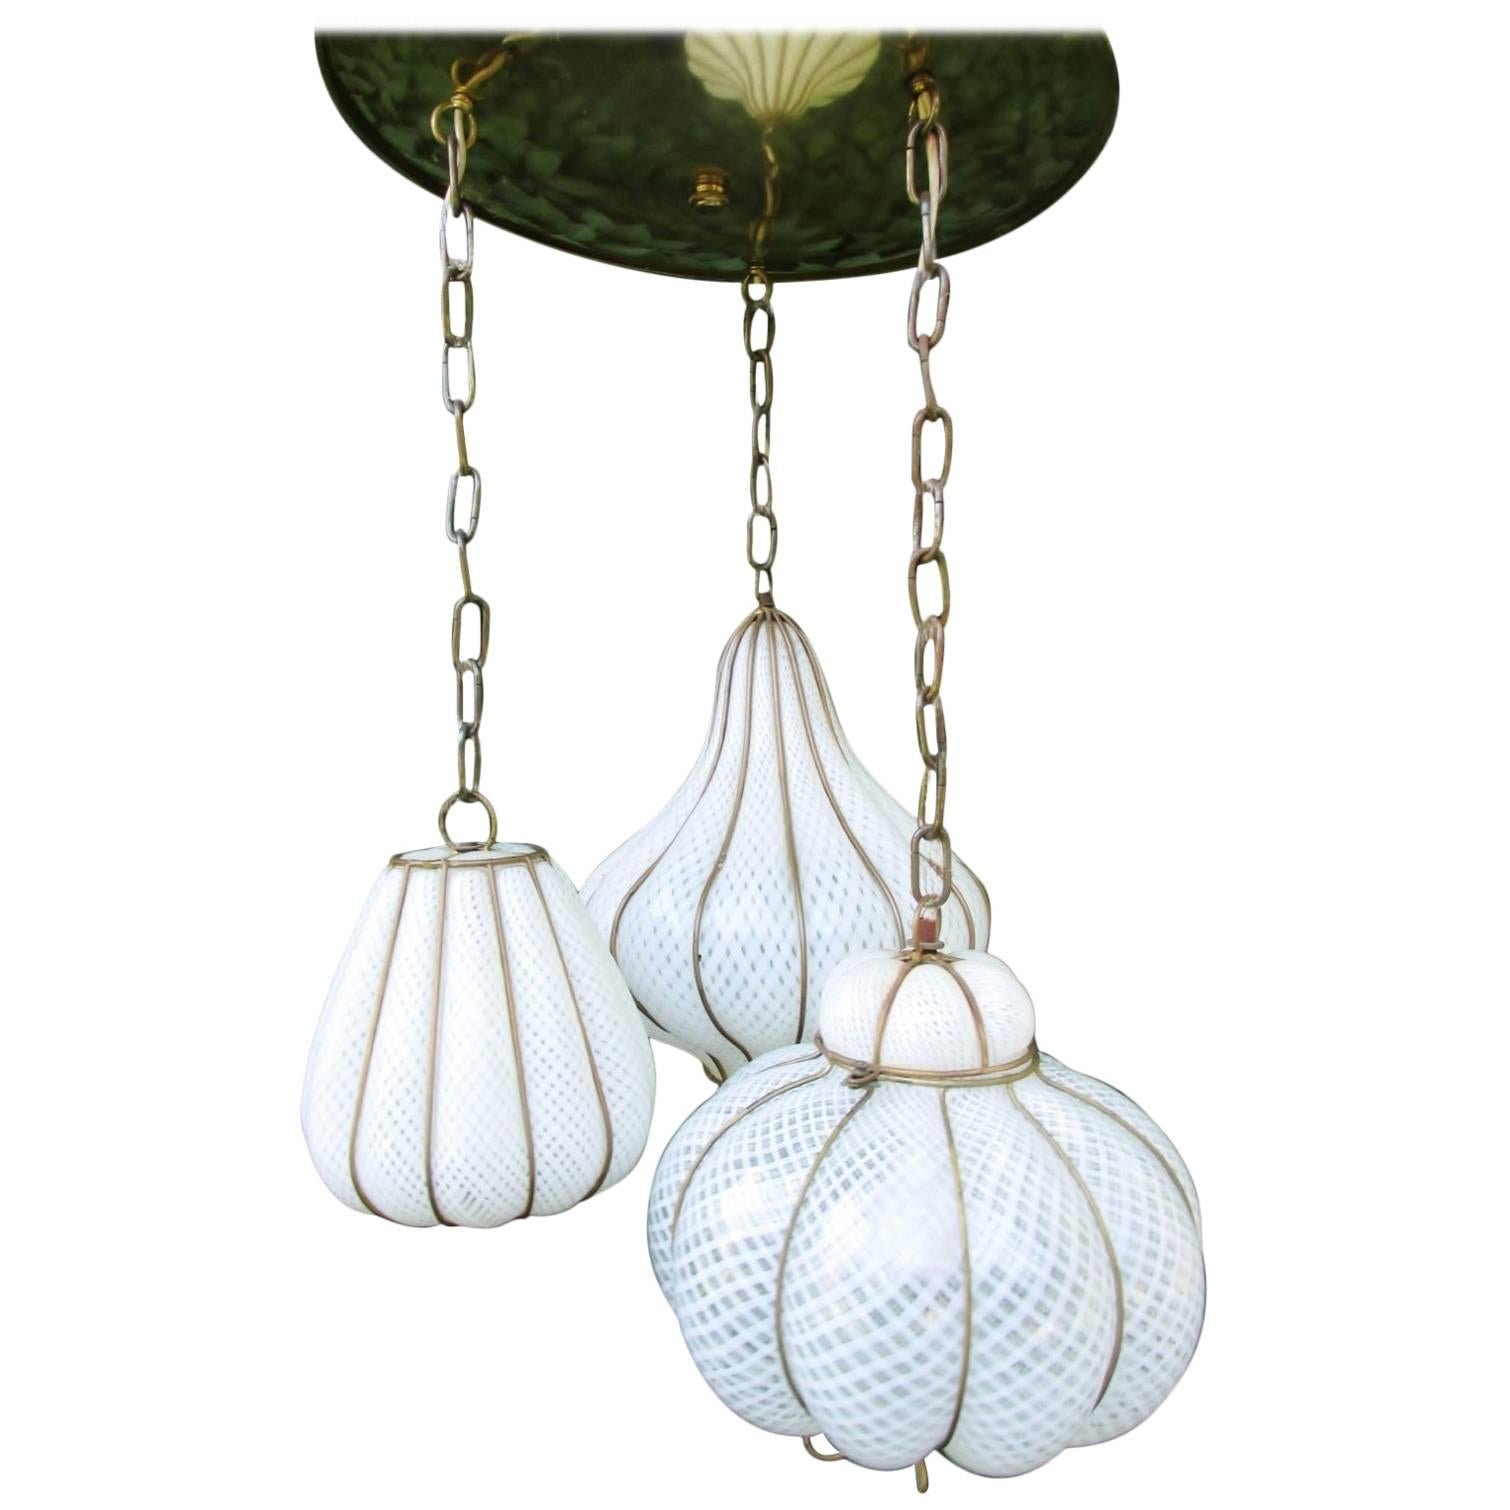 Midcentury Feldman Triple Pendant Italian Caged Latticino Glass Chandelier Lamp For Sale